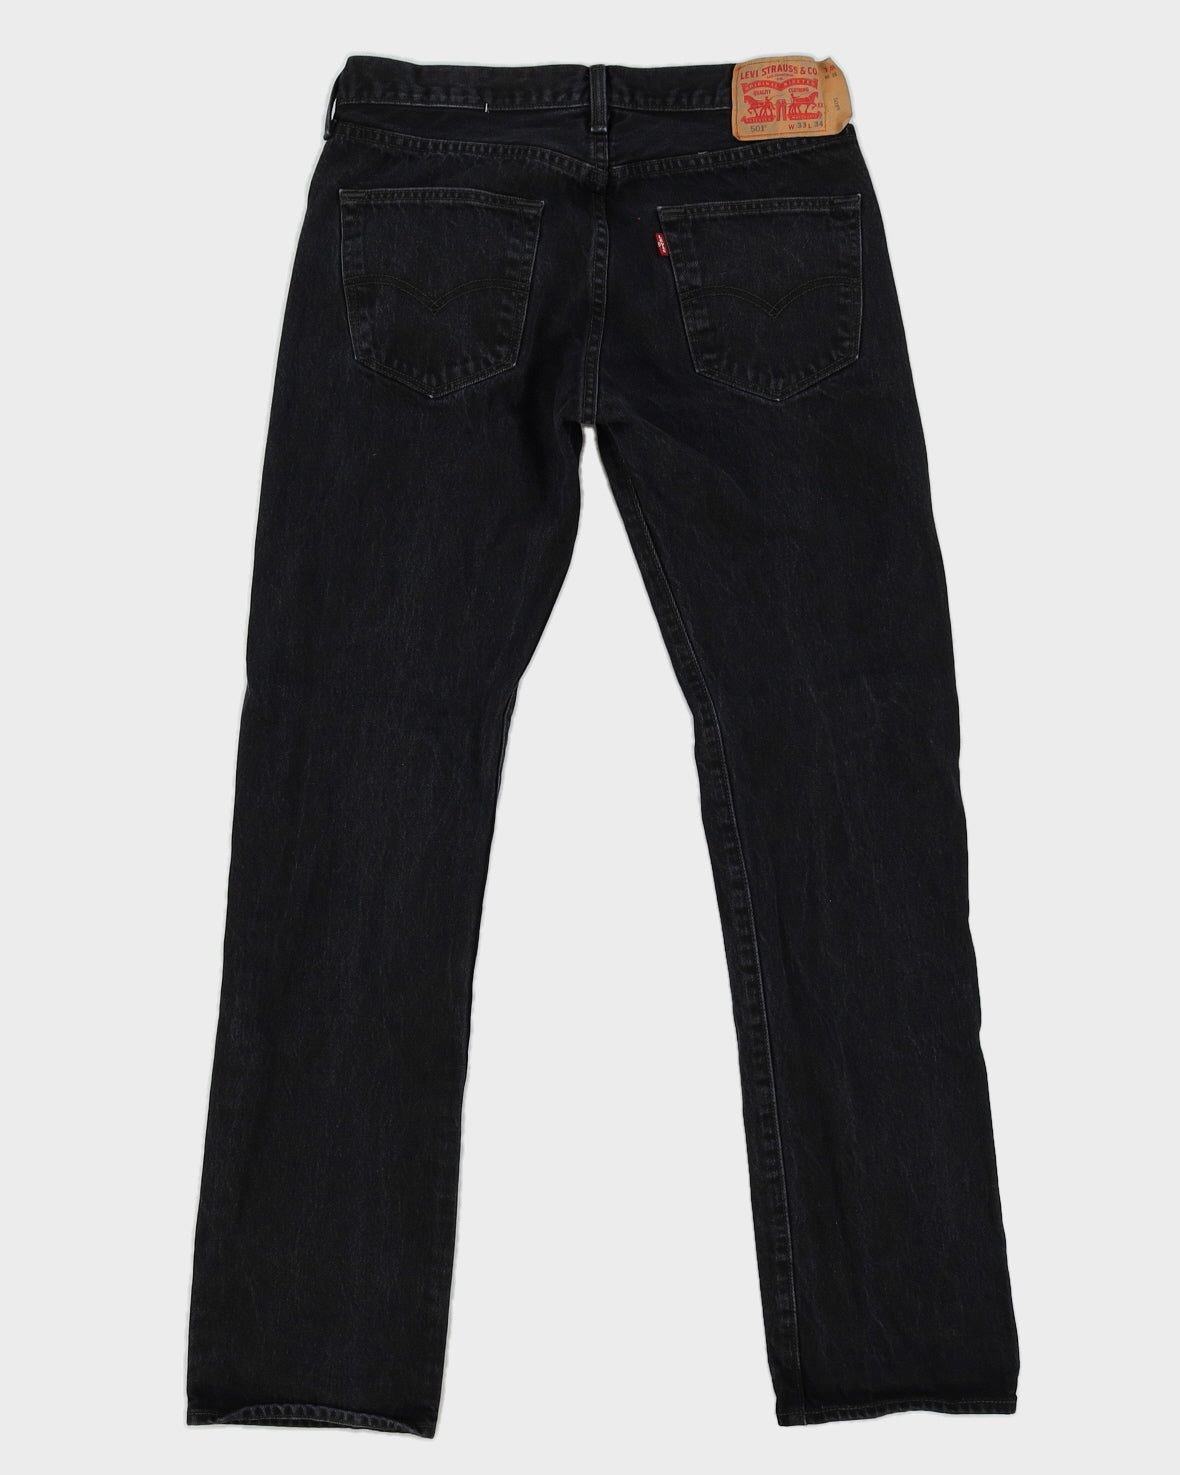 Levi's 501 Black Jeans - W33 L34